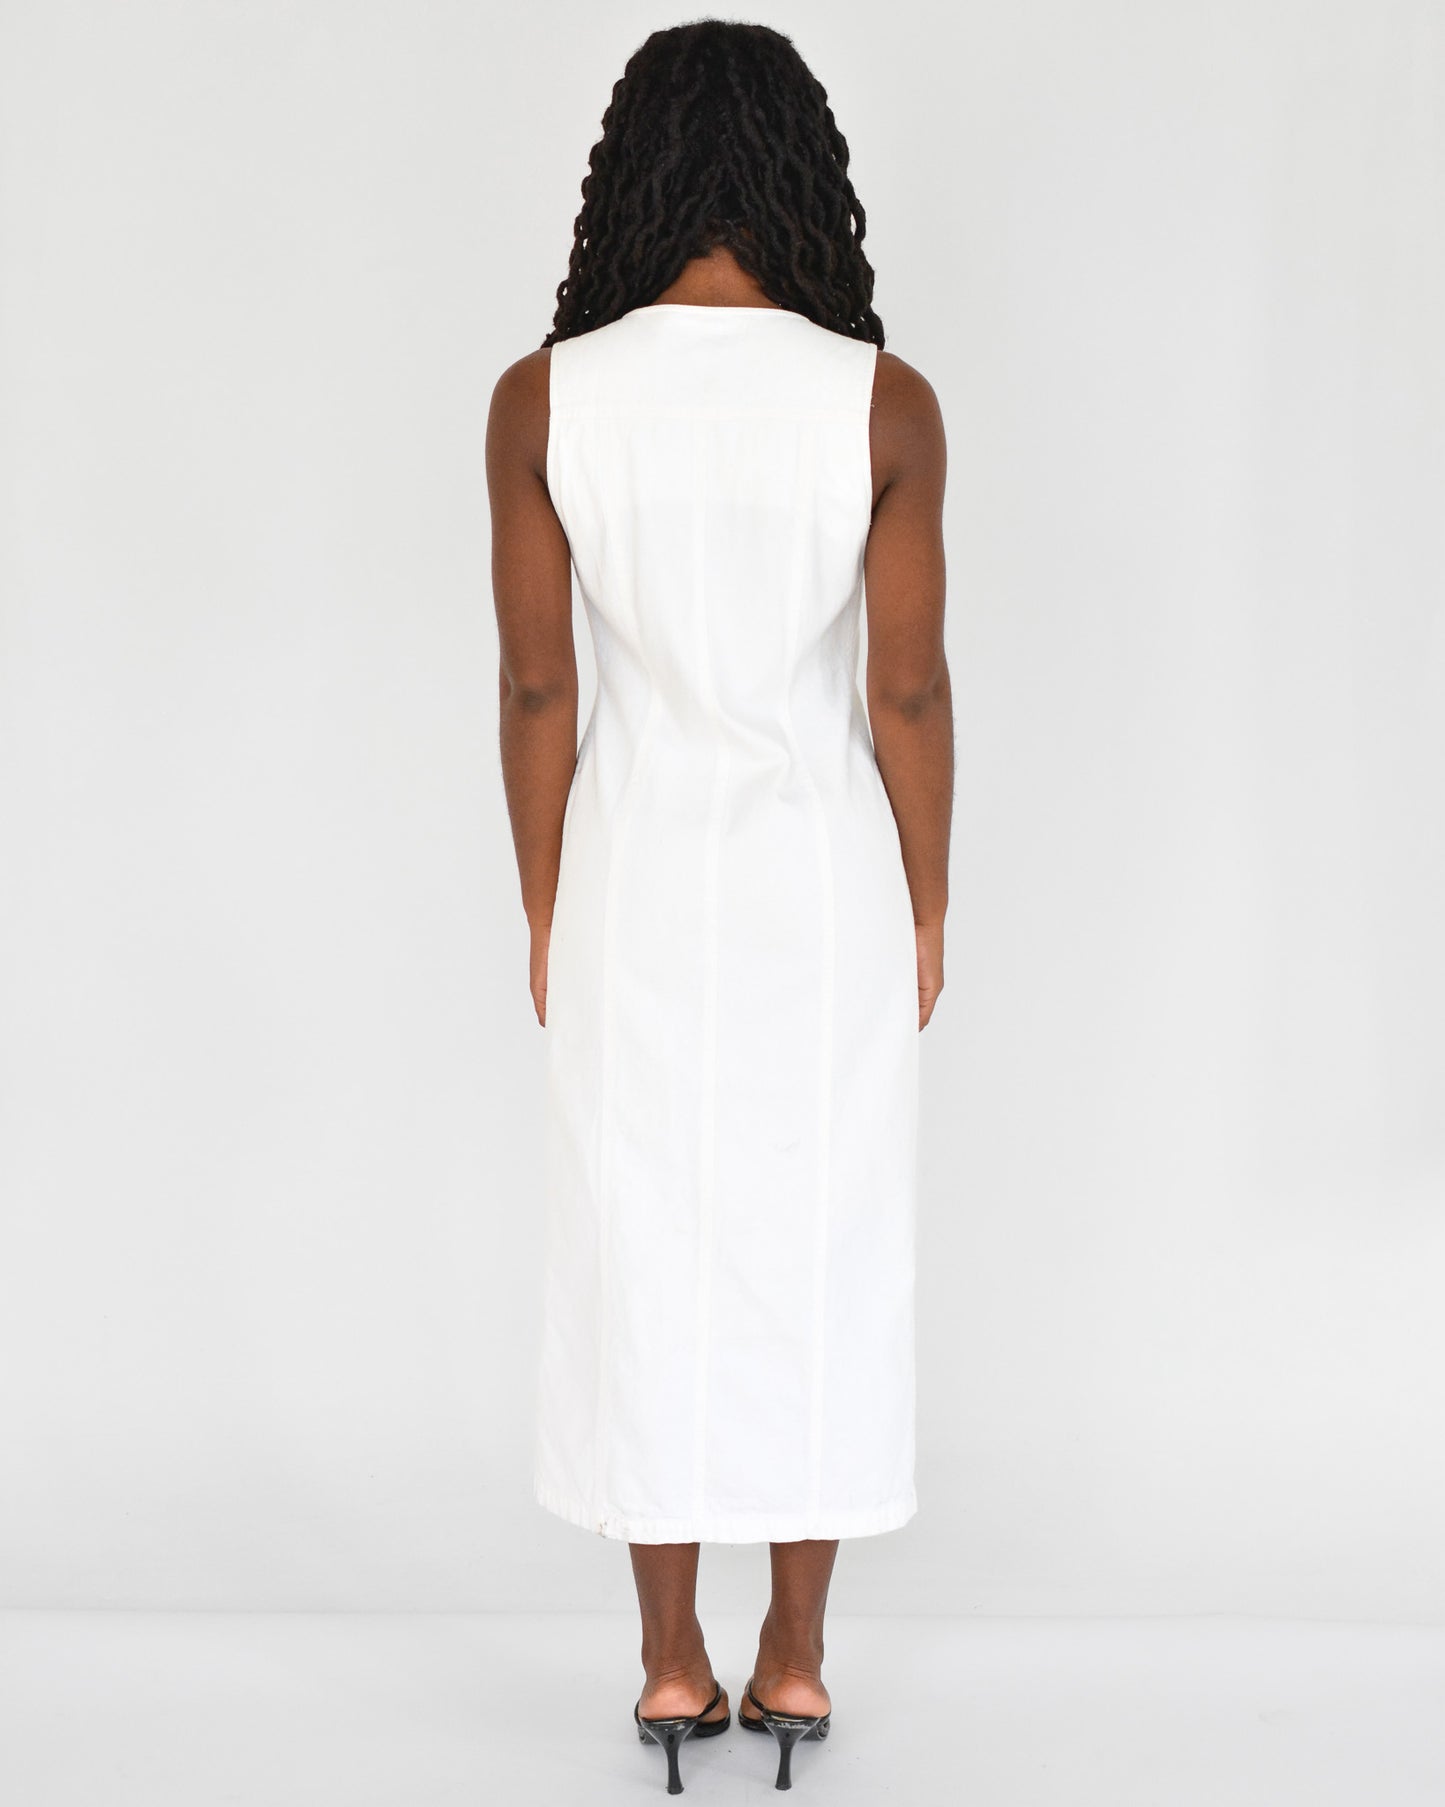 White Denim Button Down Dress (S-M)